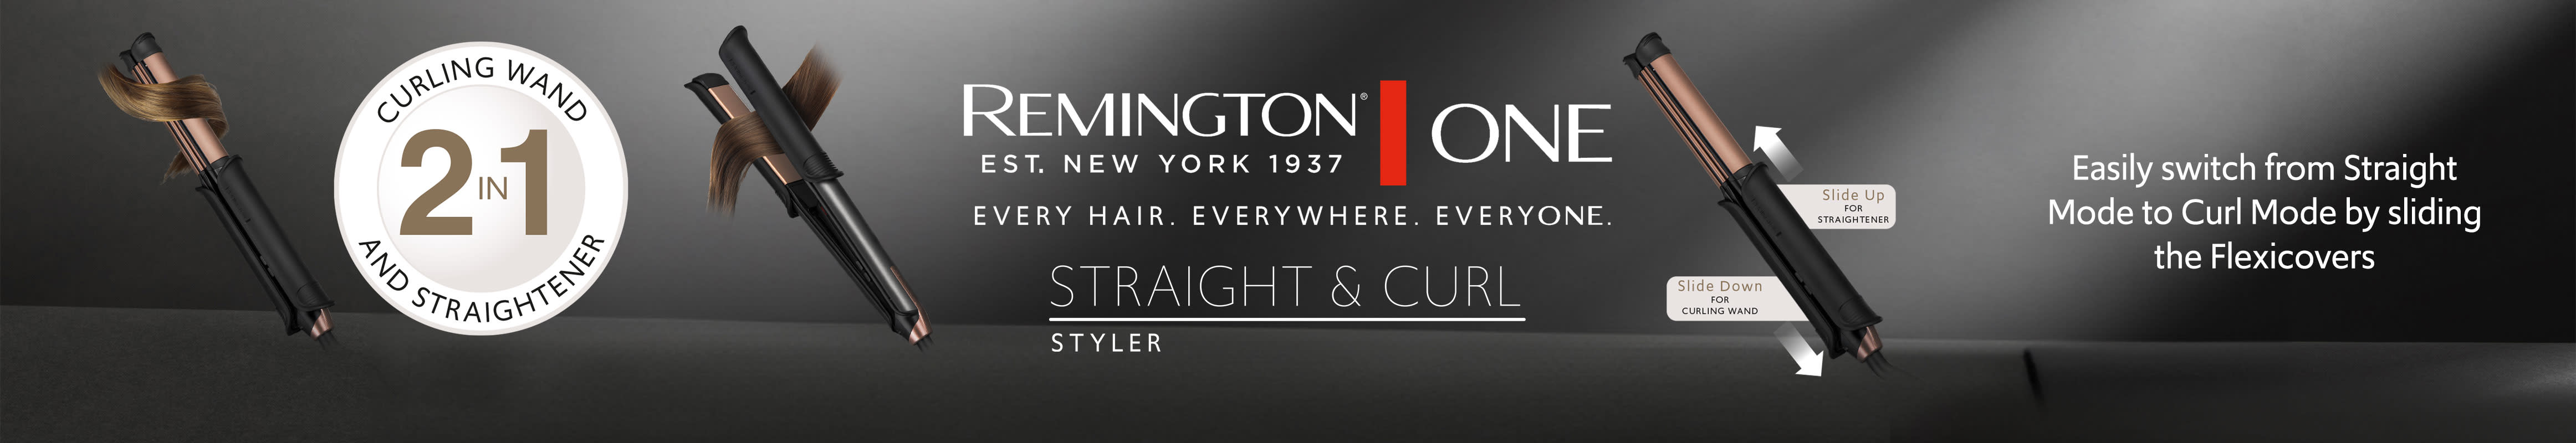 Remington PROLUXE Salon Straightener, S9100AU - Hair Dryers & Straighteners